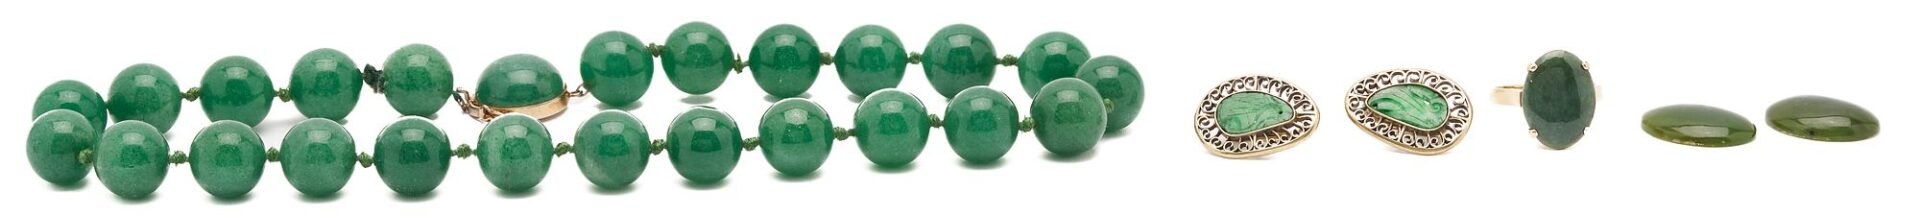 Lot 868: 6 Spinach Green Jadeite Jewelry Items